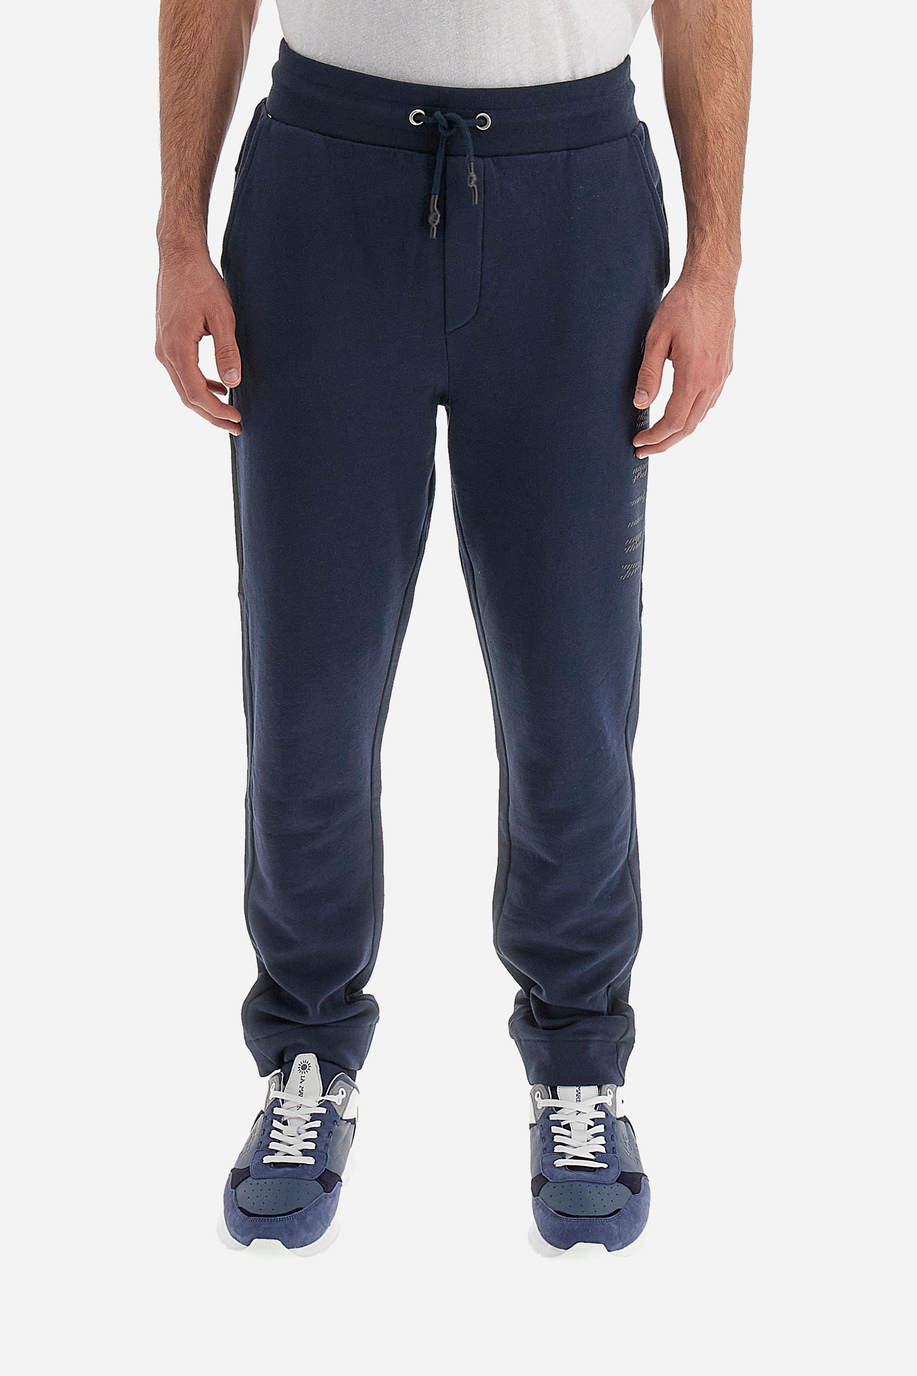 Men's jogger Logos cotton fleece with drawstring - Videlio - Trousers | La Martina - Official Online Shop